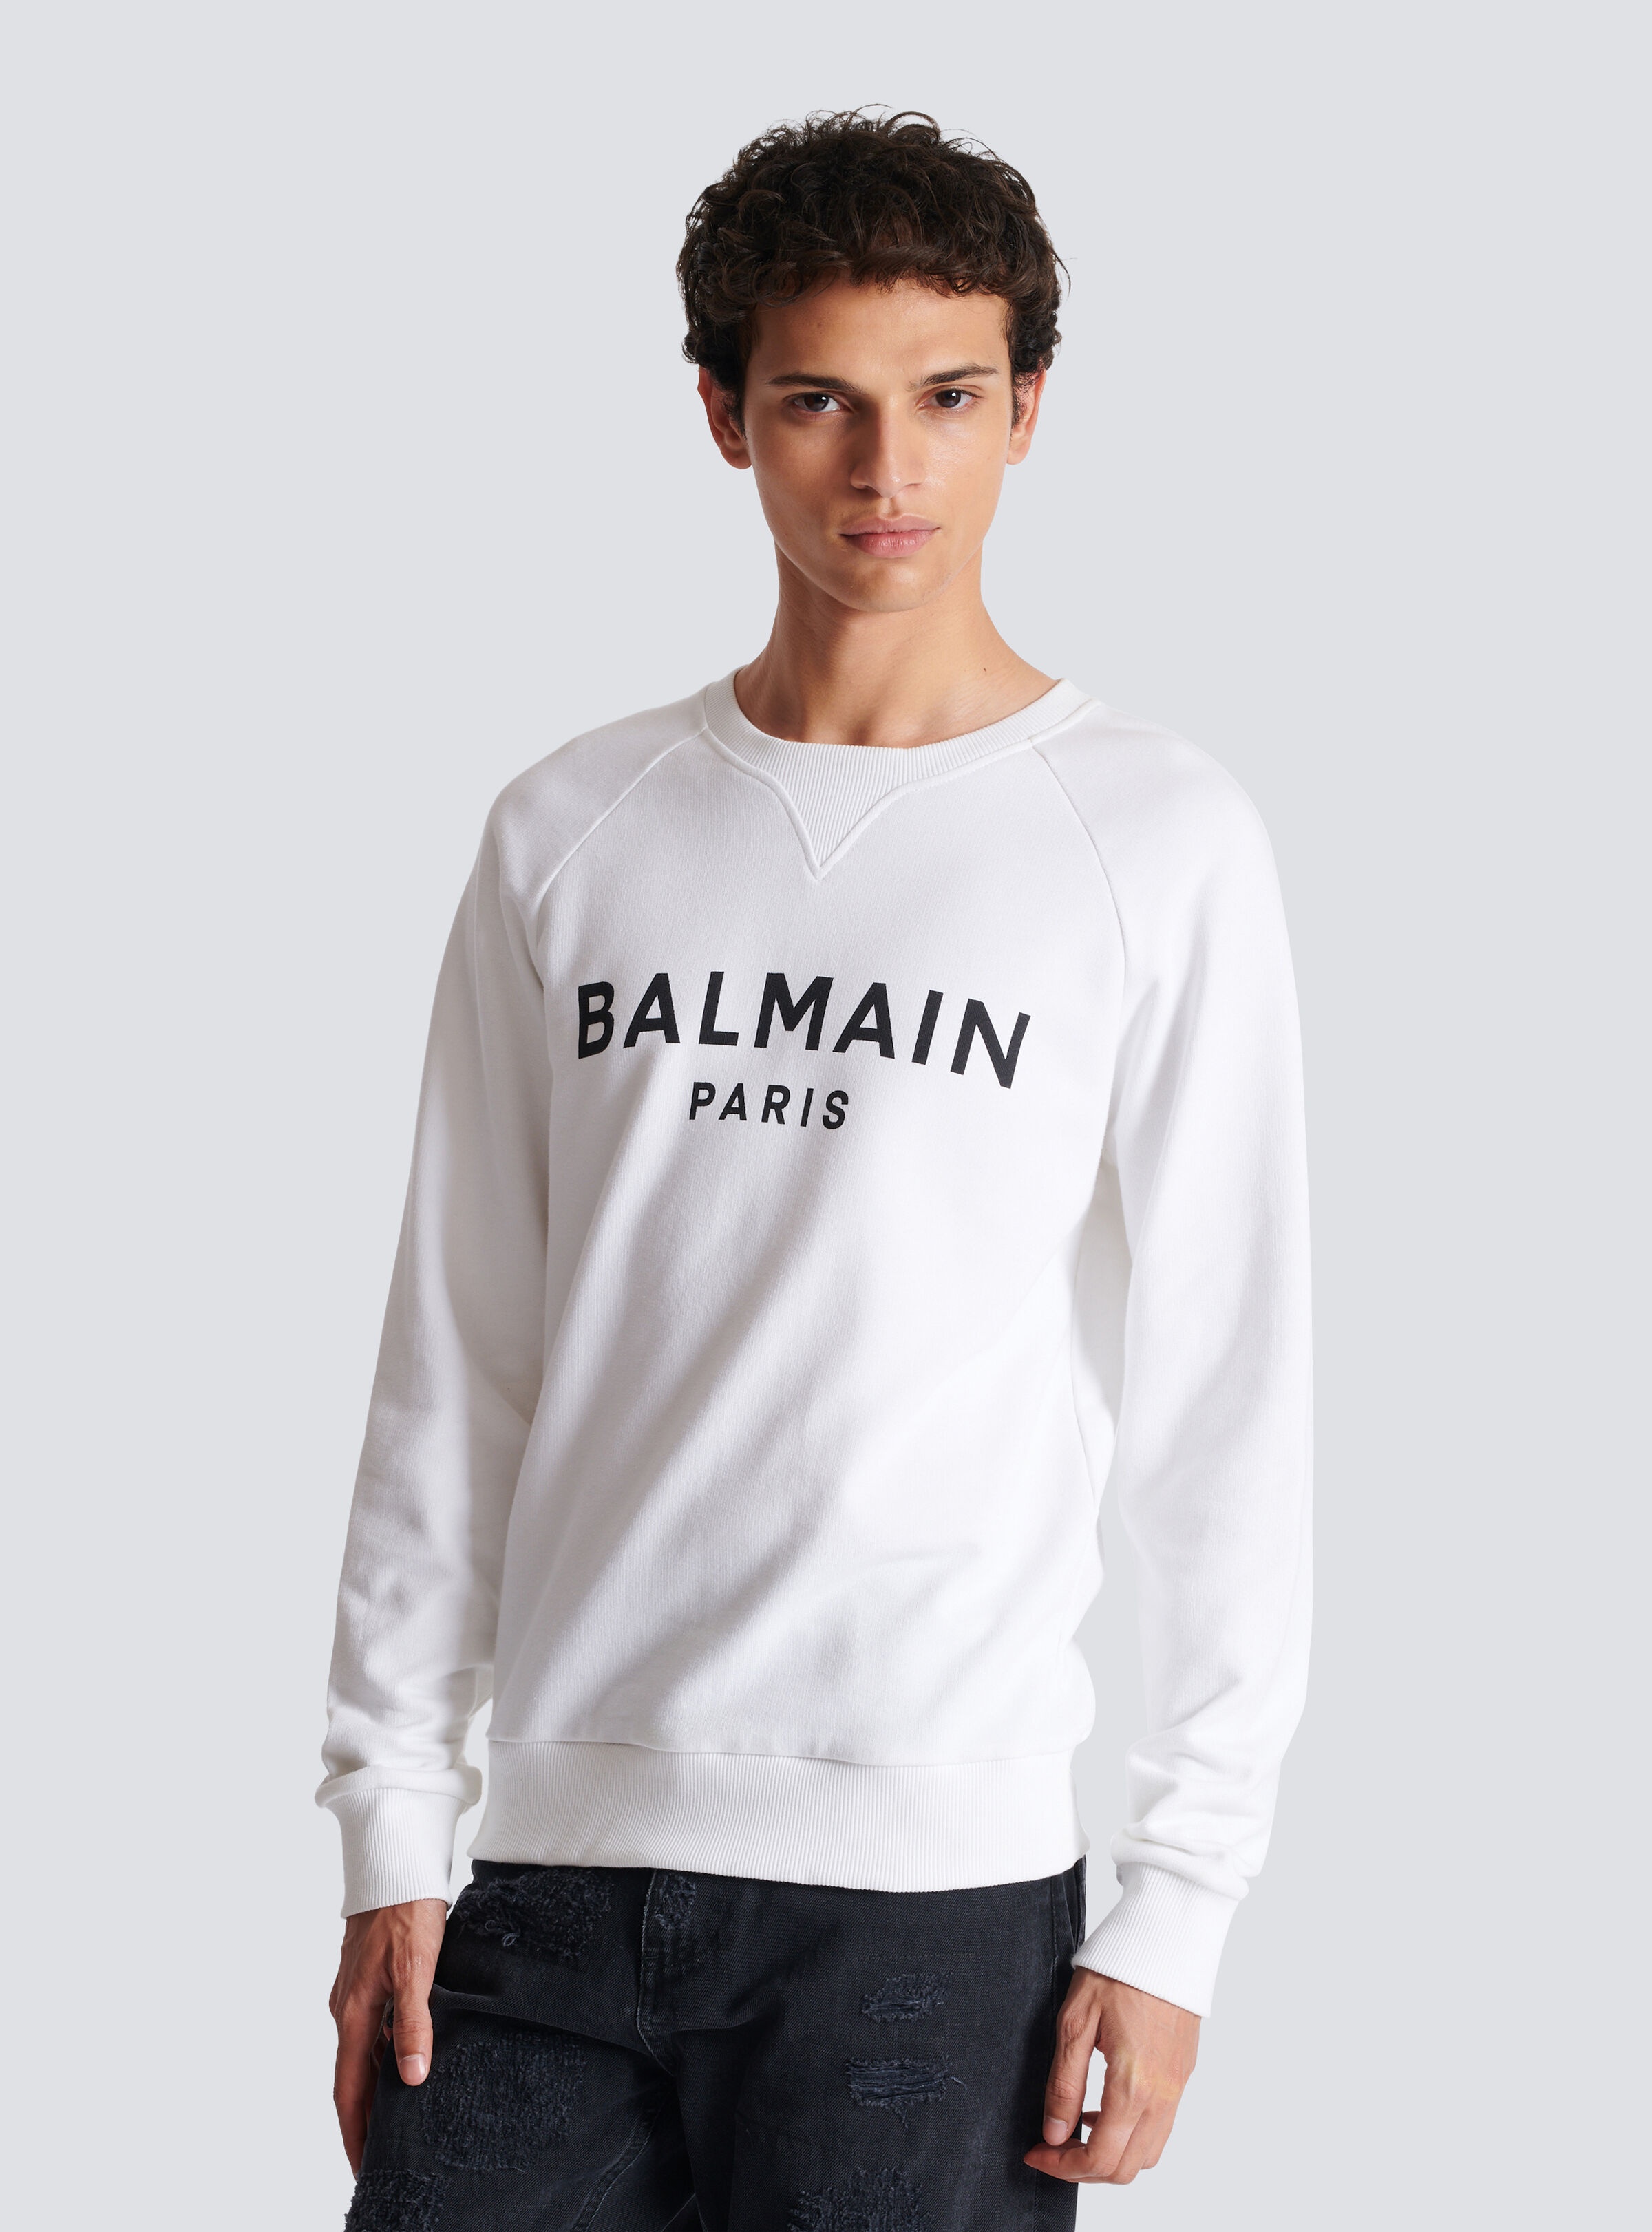 Balmain Paris sweatshirt - 6